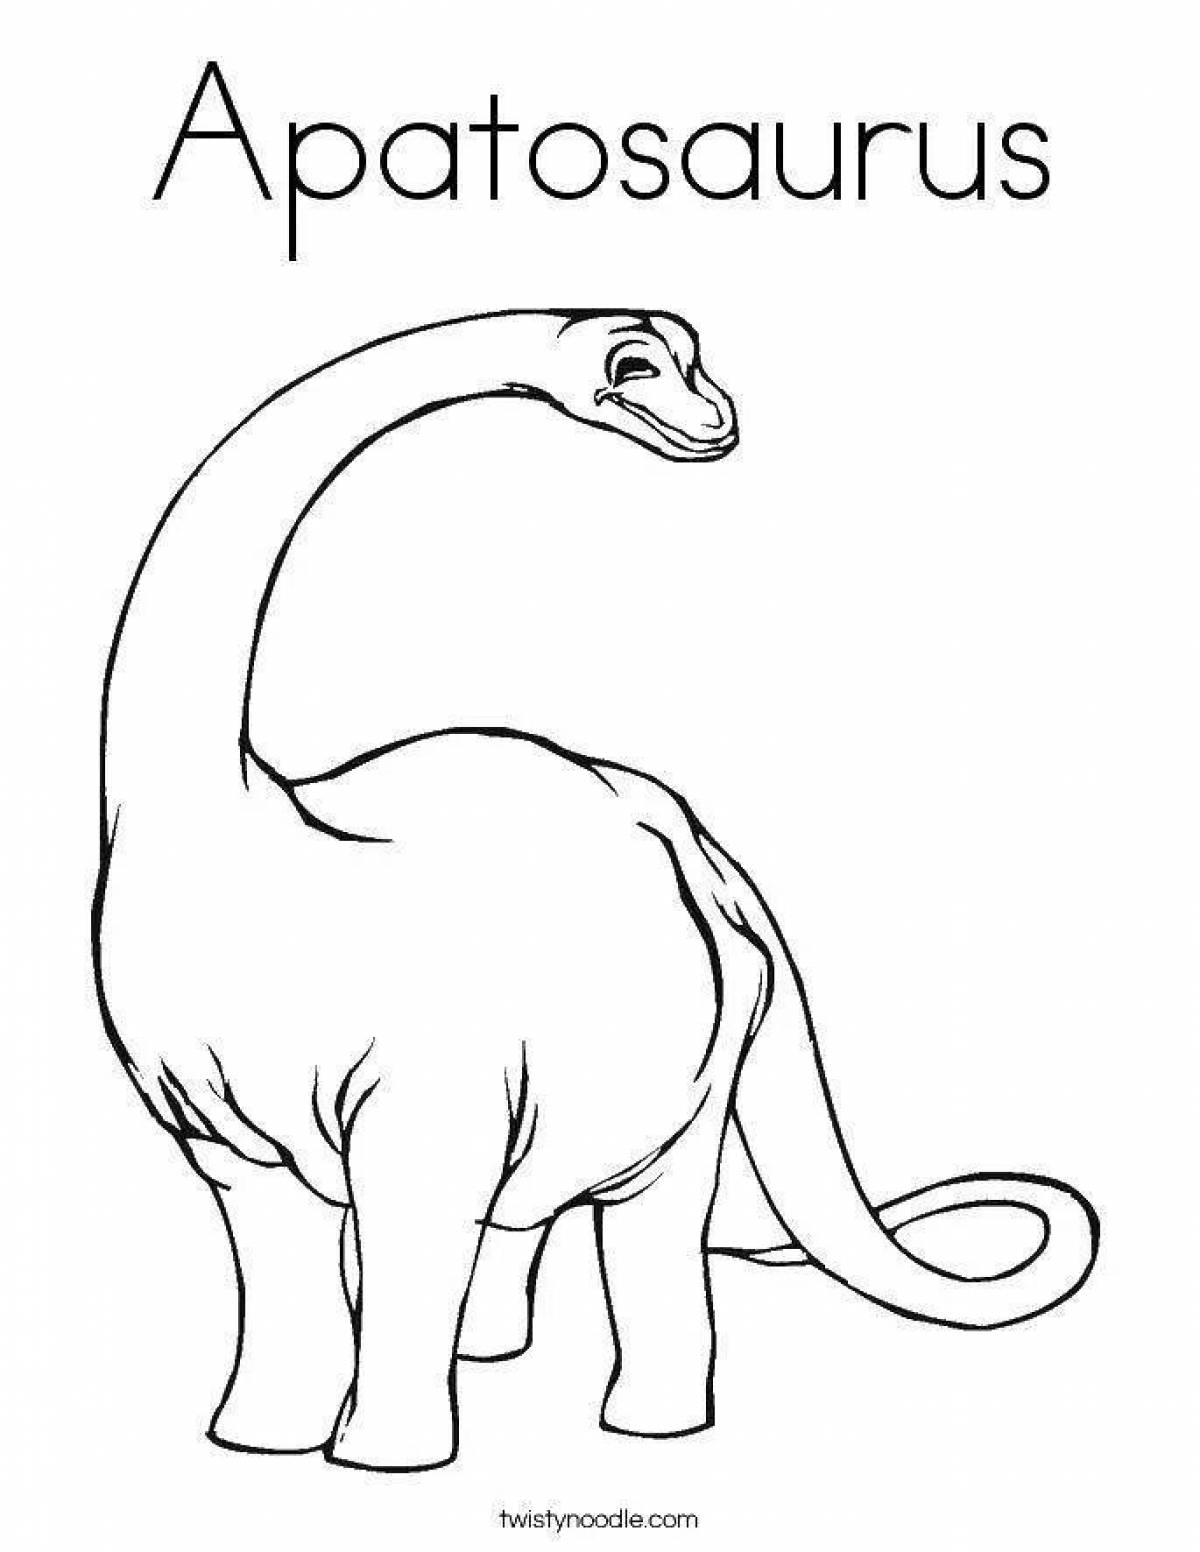 Brontosaurus #8